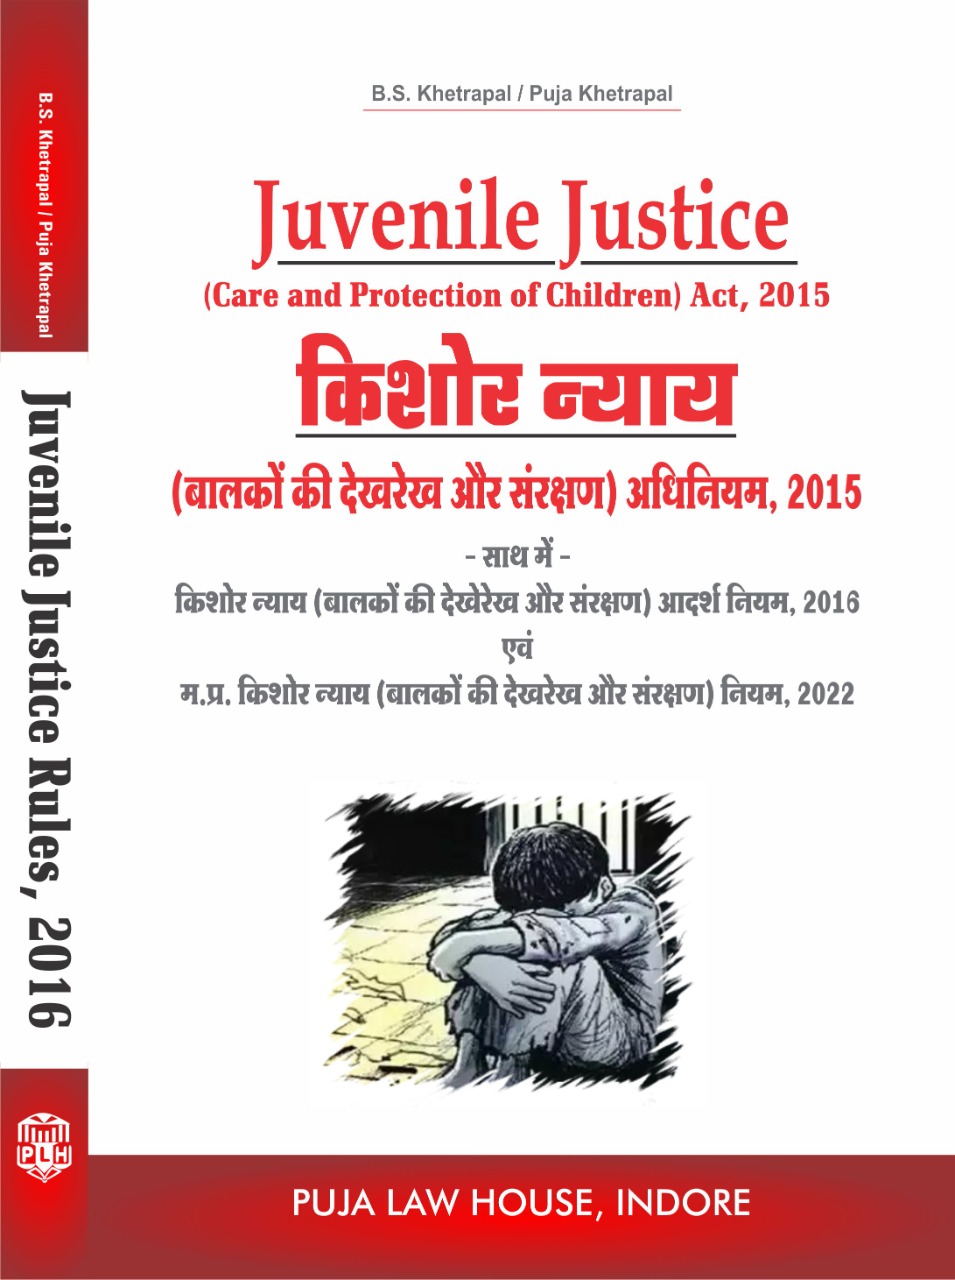  Buy Juvenile Justice (Care and Protection of Children) Act, 2015 alongwith Juvenile Justice (Care and Protection of Children) Model Rules, 2016 and Madhya Pradesh Juvenile Justice (Care and Protection of Children) Rules, 2022 / किशोर न्याय (बालको की देख-रेख और संरक्षण) अधिनियम, 2015 साथ में  किशोर न्याय (बालको की देख-रेख और संरक्षण) आदर्श नियम, 2016 एवं किशोर न्याय (बालको की देख-रेख और संरक्षण)  नियम, 2022